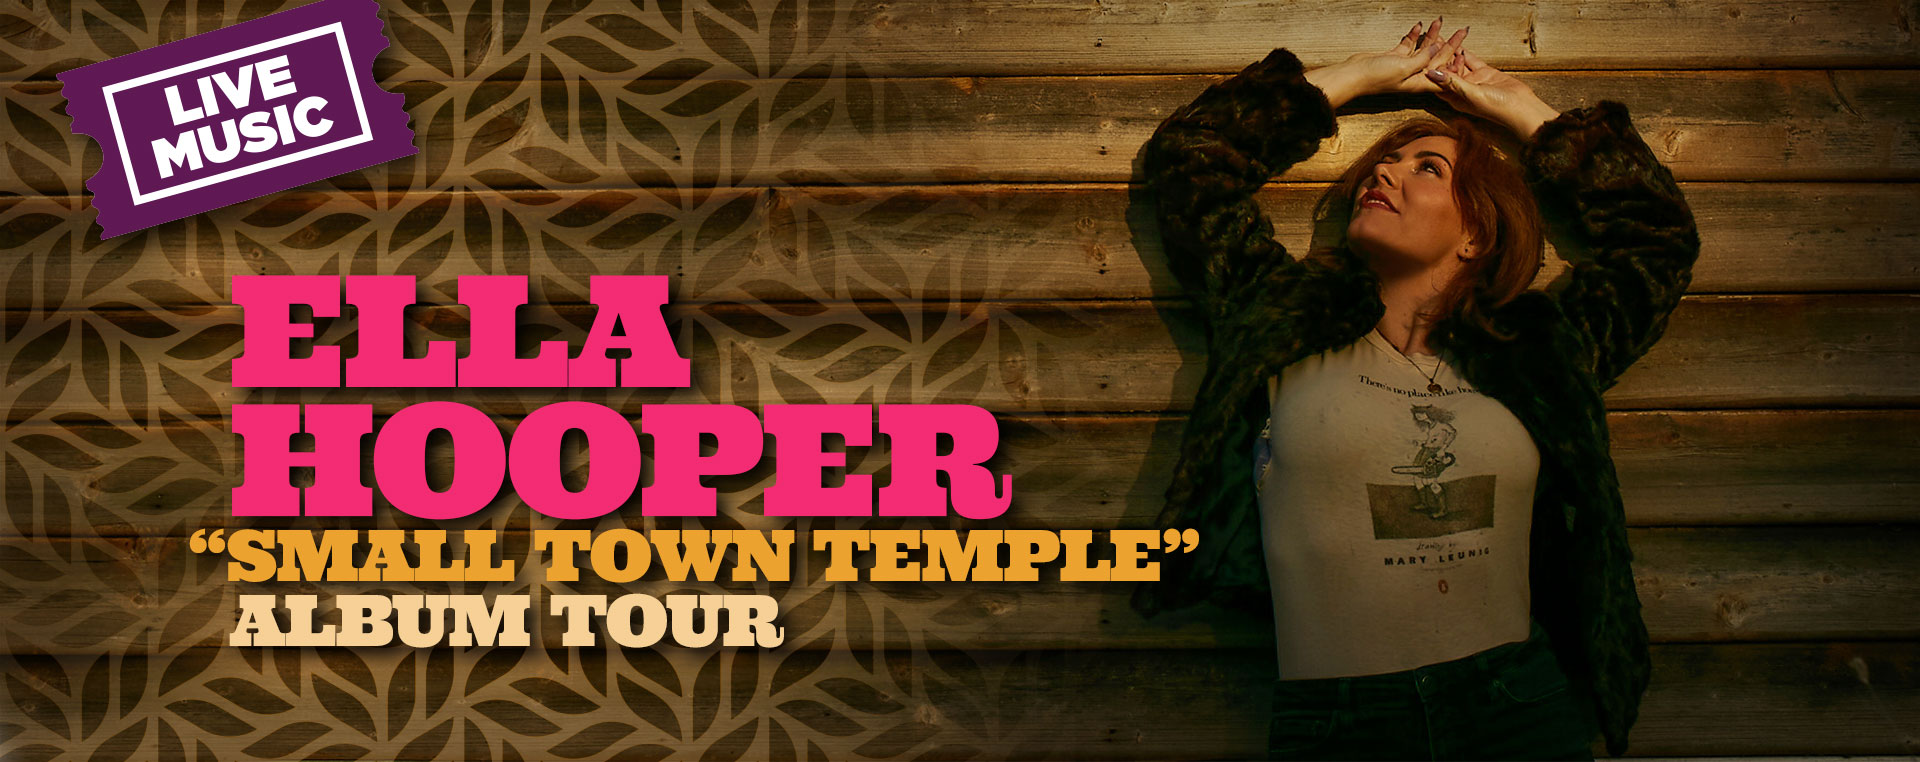 Ella Hooper — “Small Town Temple” Album Tour 16 Feb